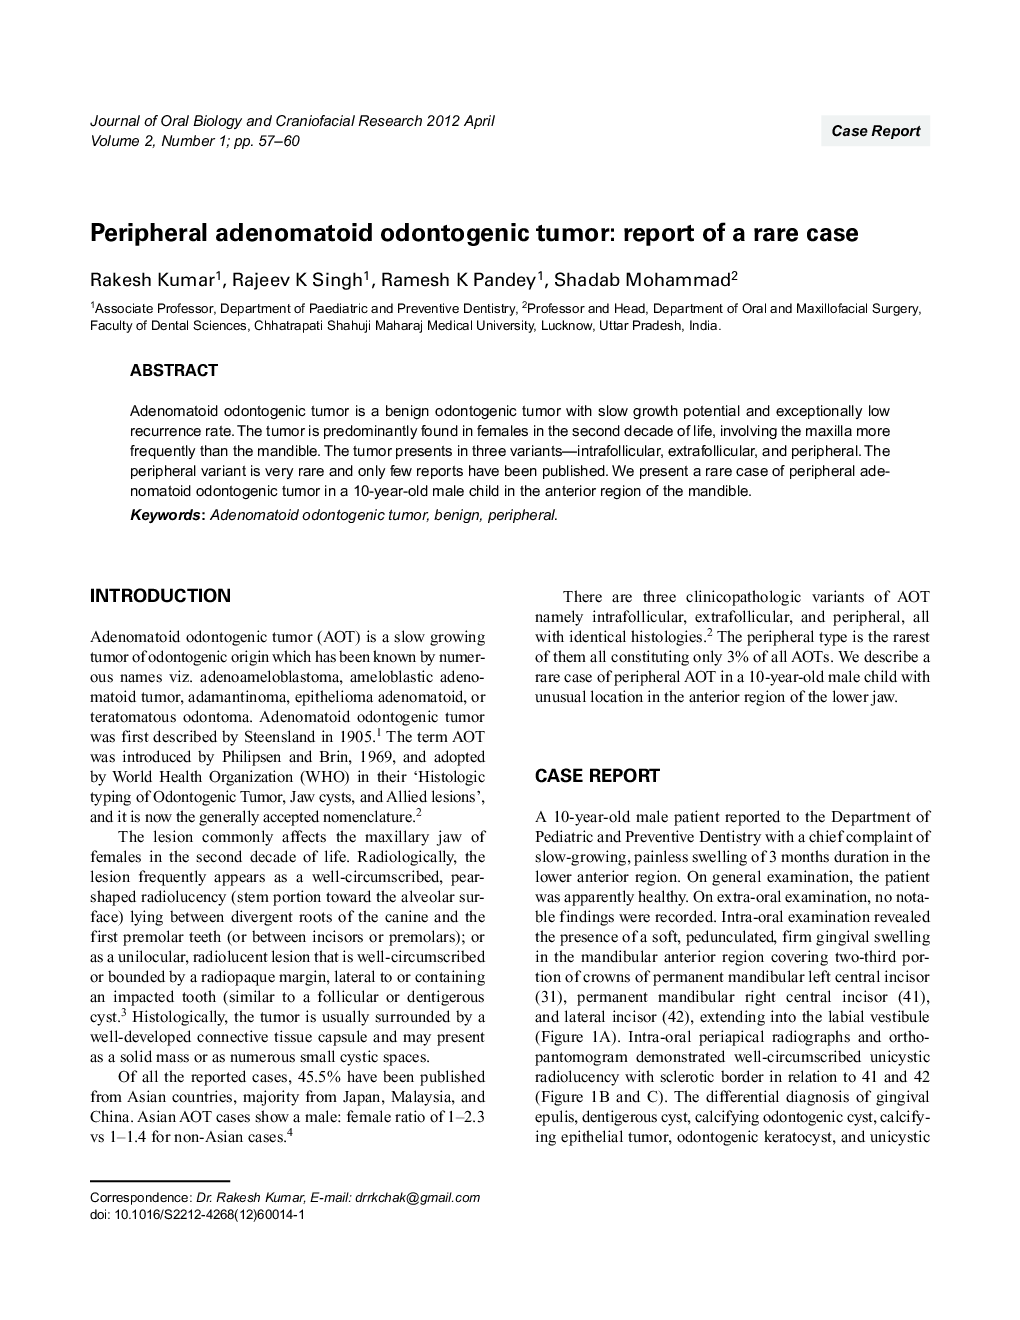 Peripheral adenomatoid odontogenic tumor: report of a rare case